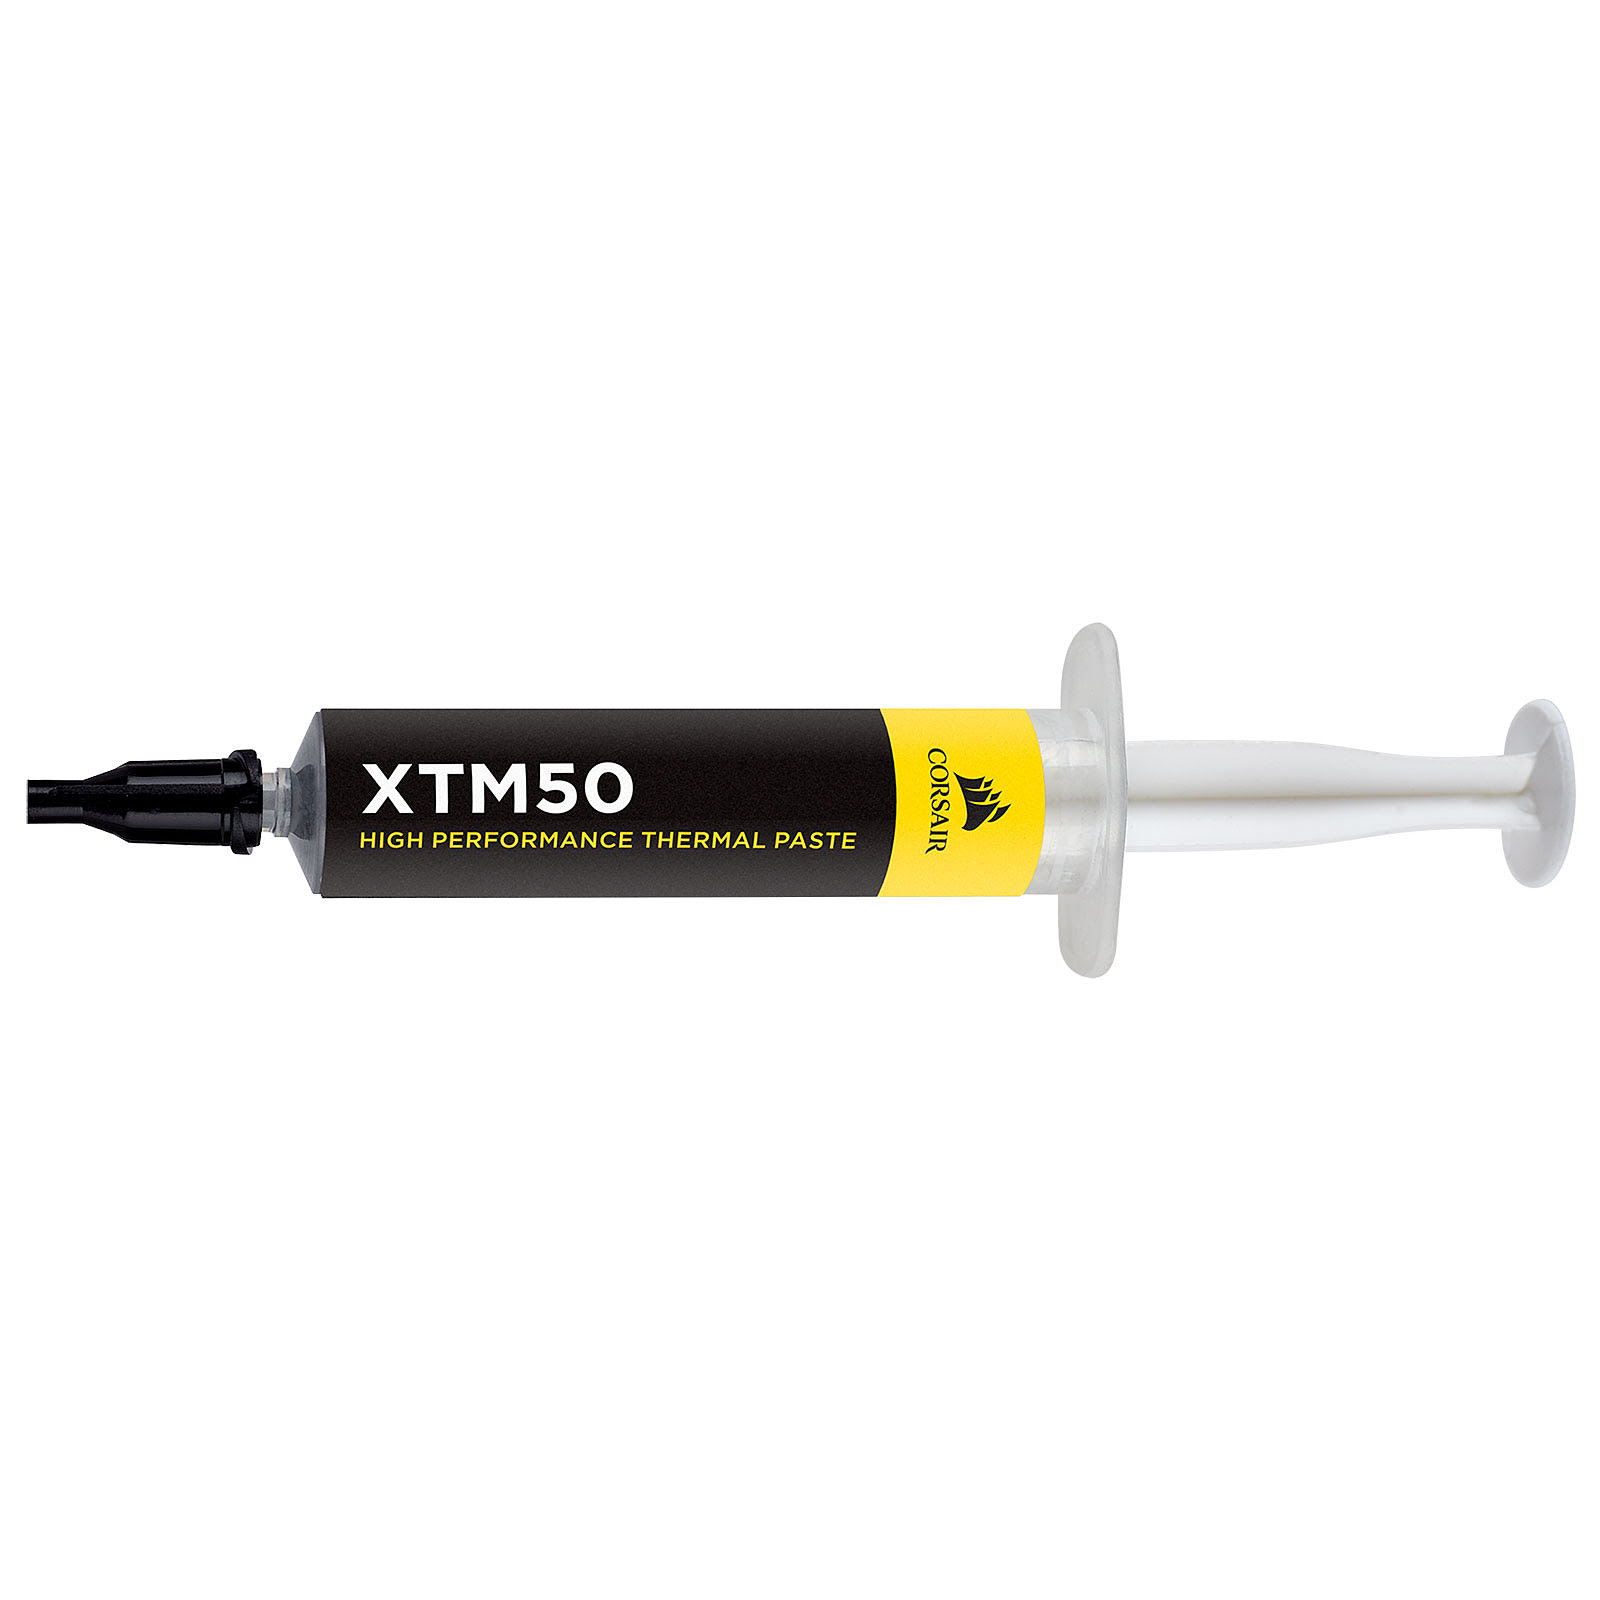 XTM50 High Performance Thermal Paste Kit 5 grammes - Corsair CT-9010002-WW - 3